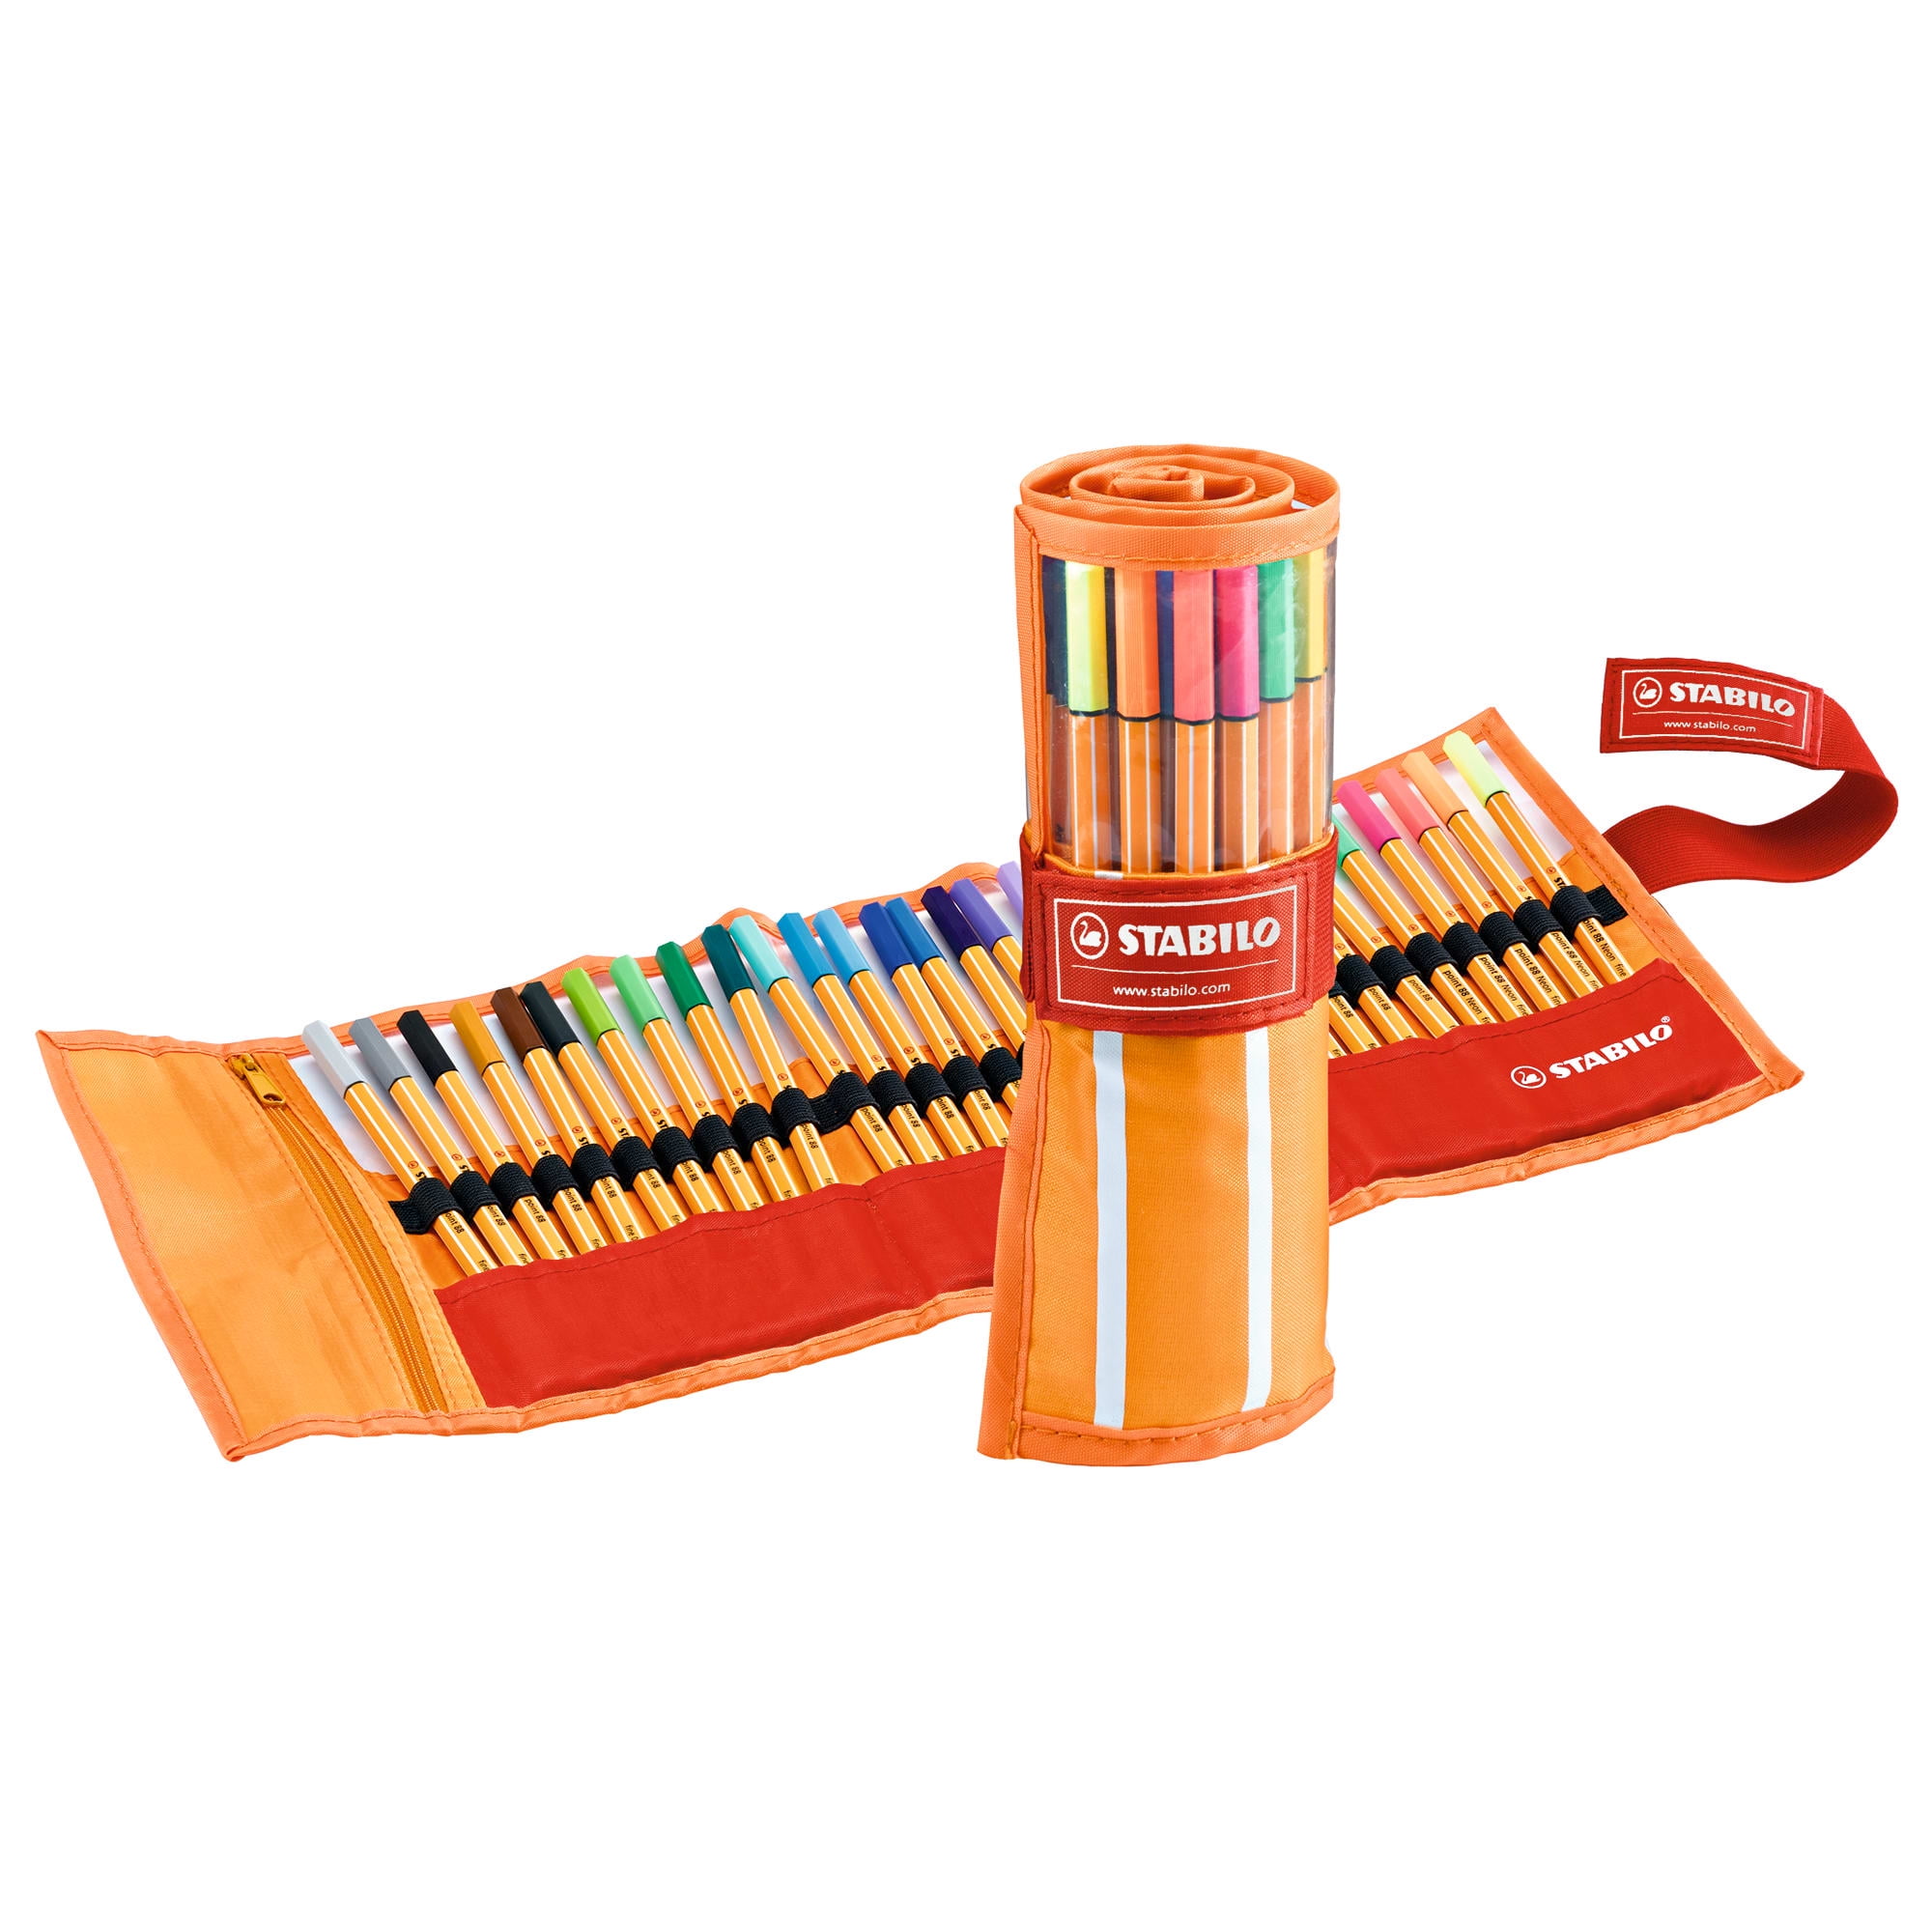 Pochette de 30 crayons feutre stabilo point 88 - pointe fine - La